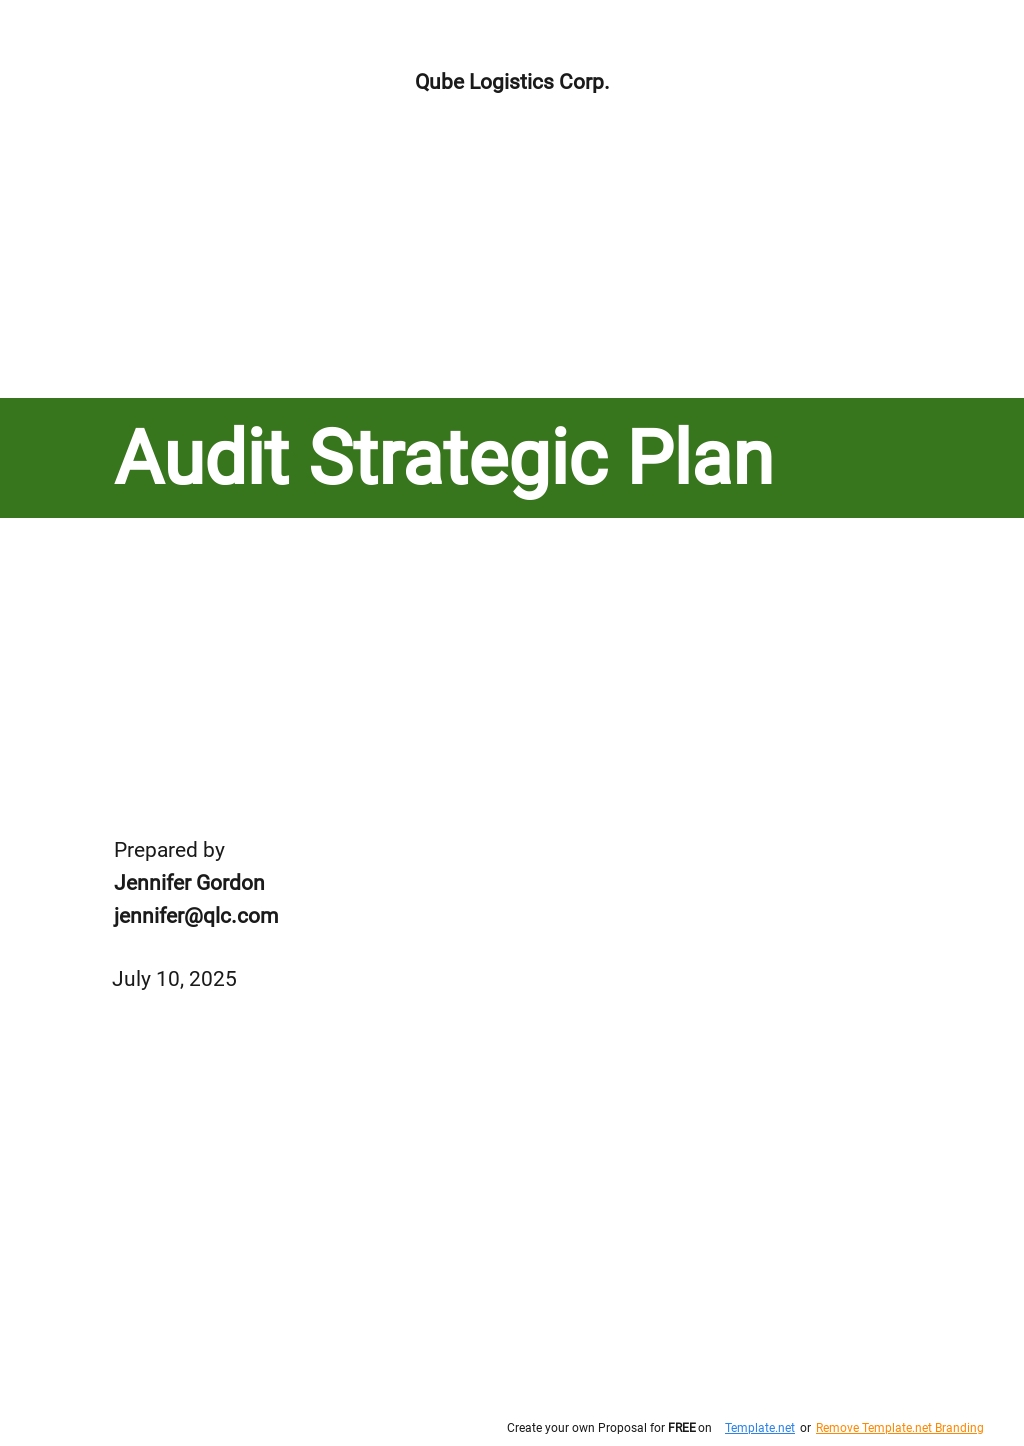 Audit Strategic Plan Template